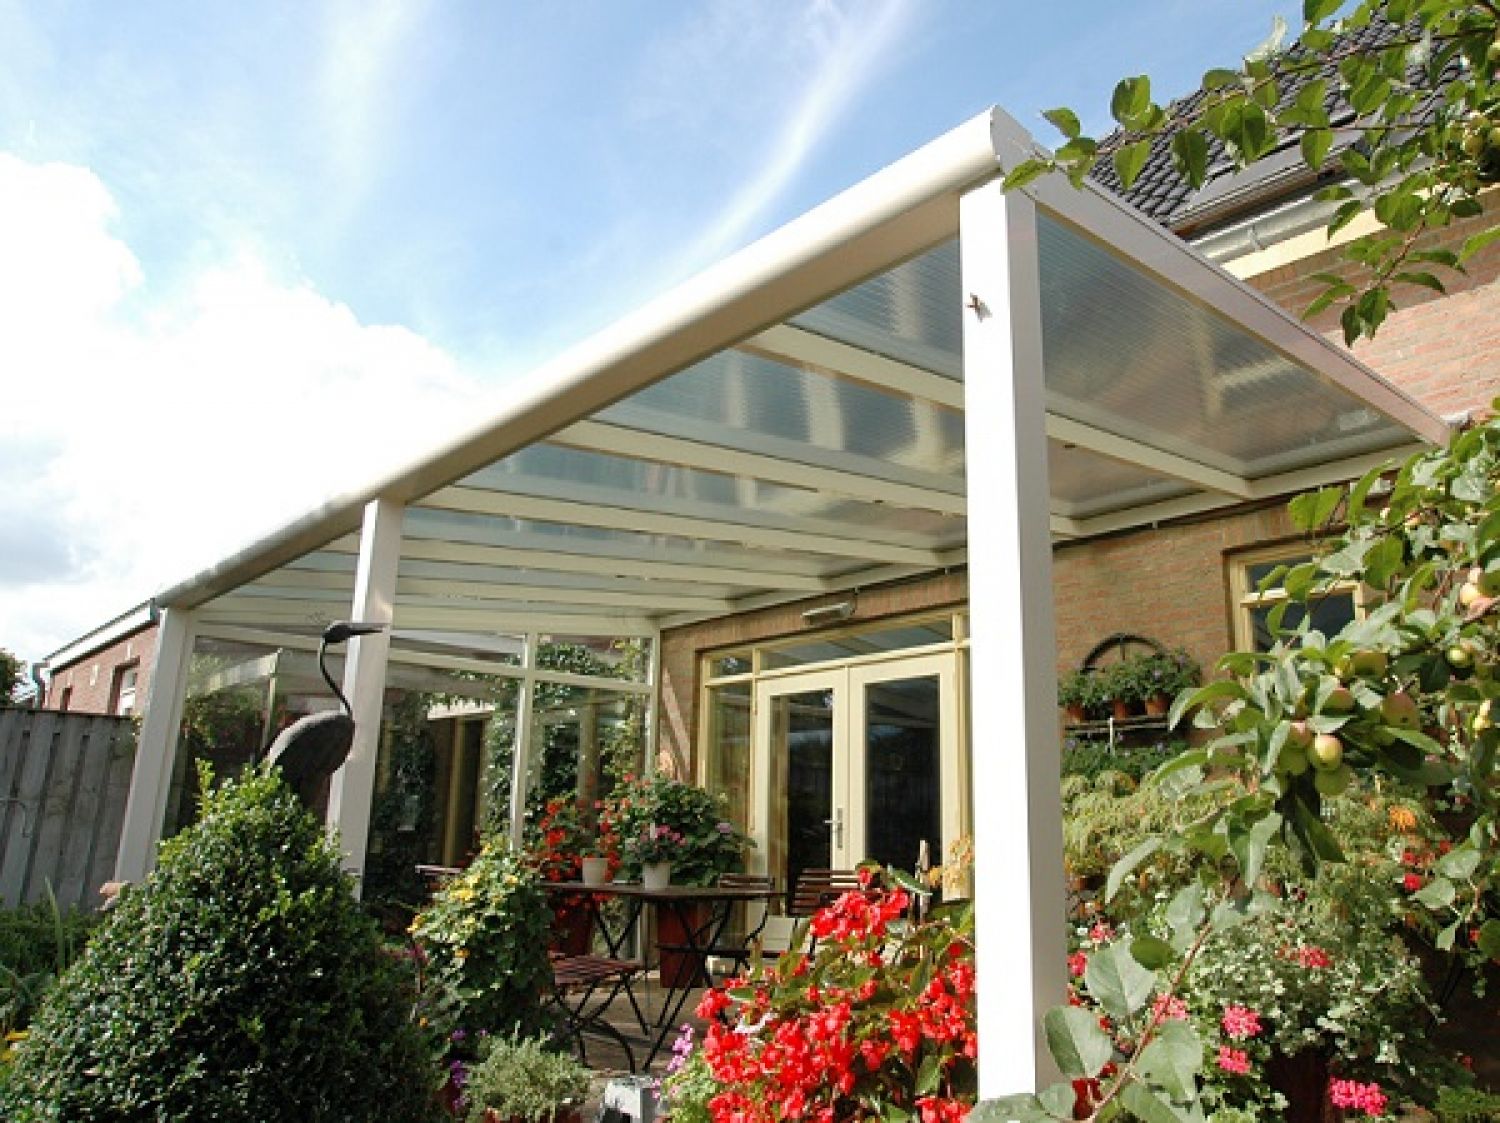 Profiline XXL veranda 1300x250 cm - polycarbonaat dak